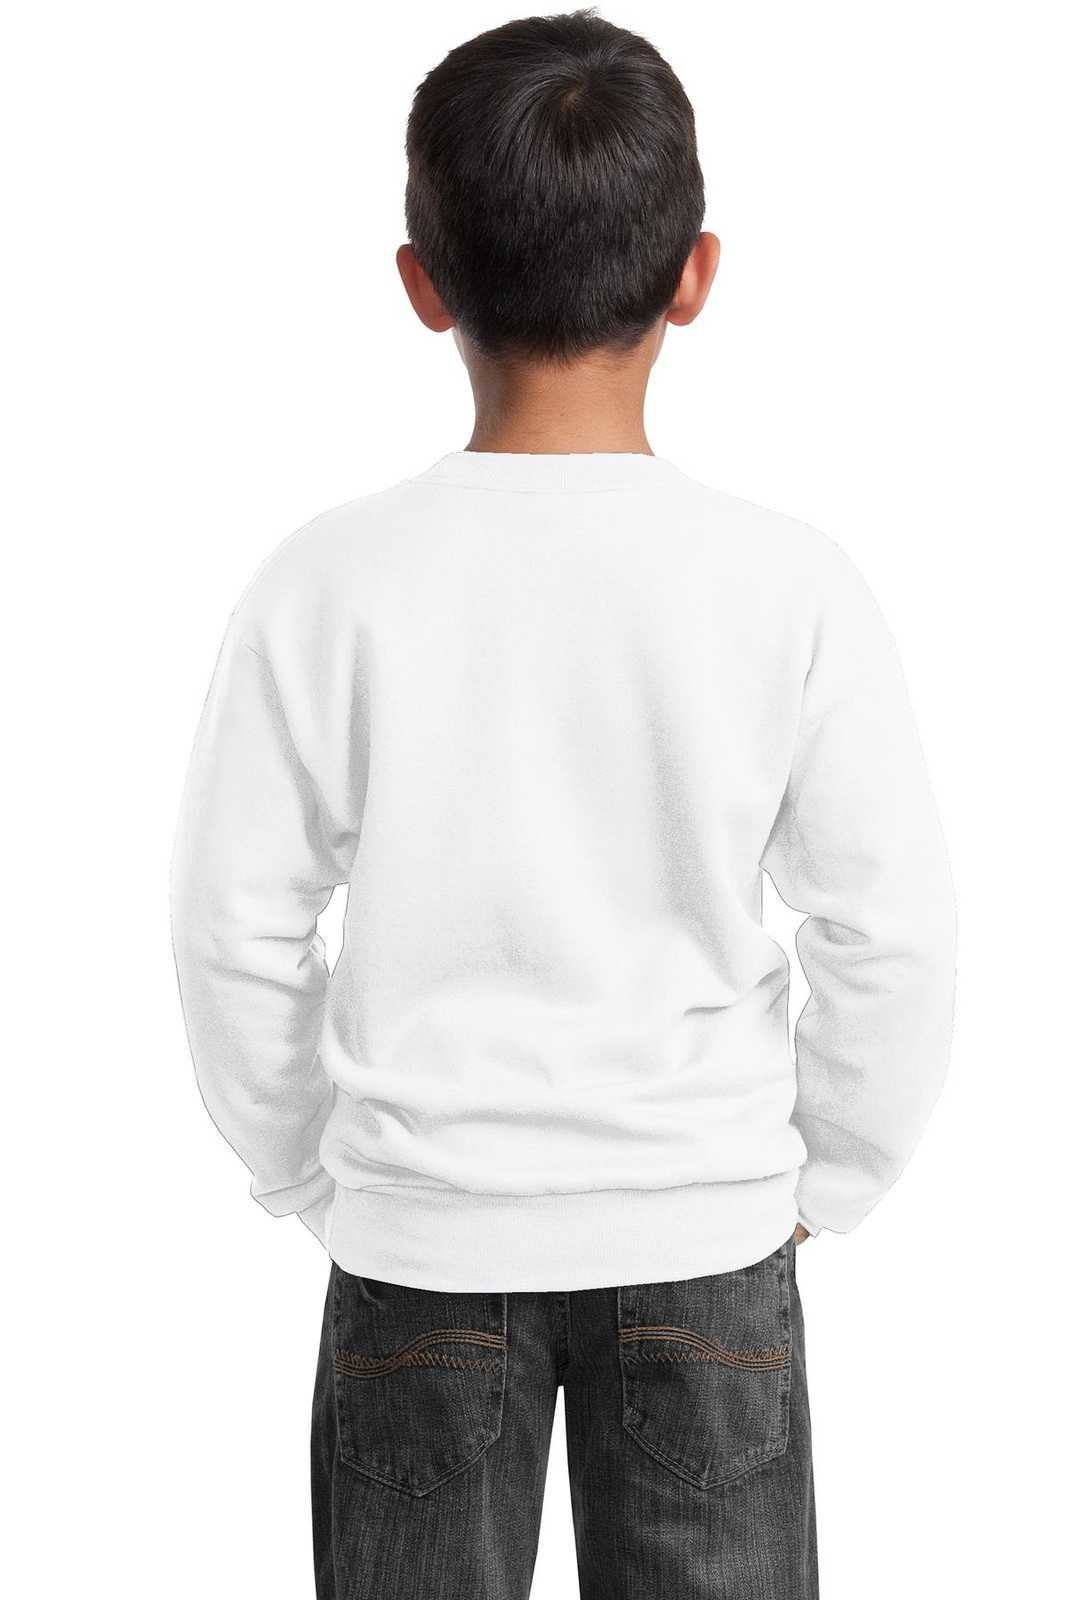 Port &amp; Company PC90Y Youth Core Fleece Crewneck Sweatshirt - White - HIT a Double - 2